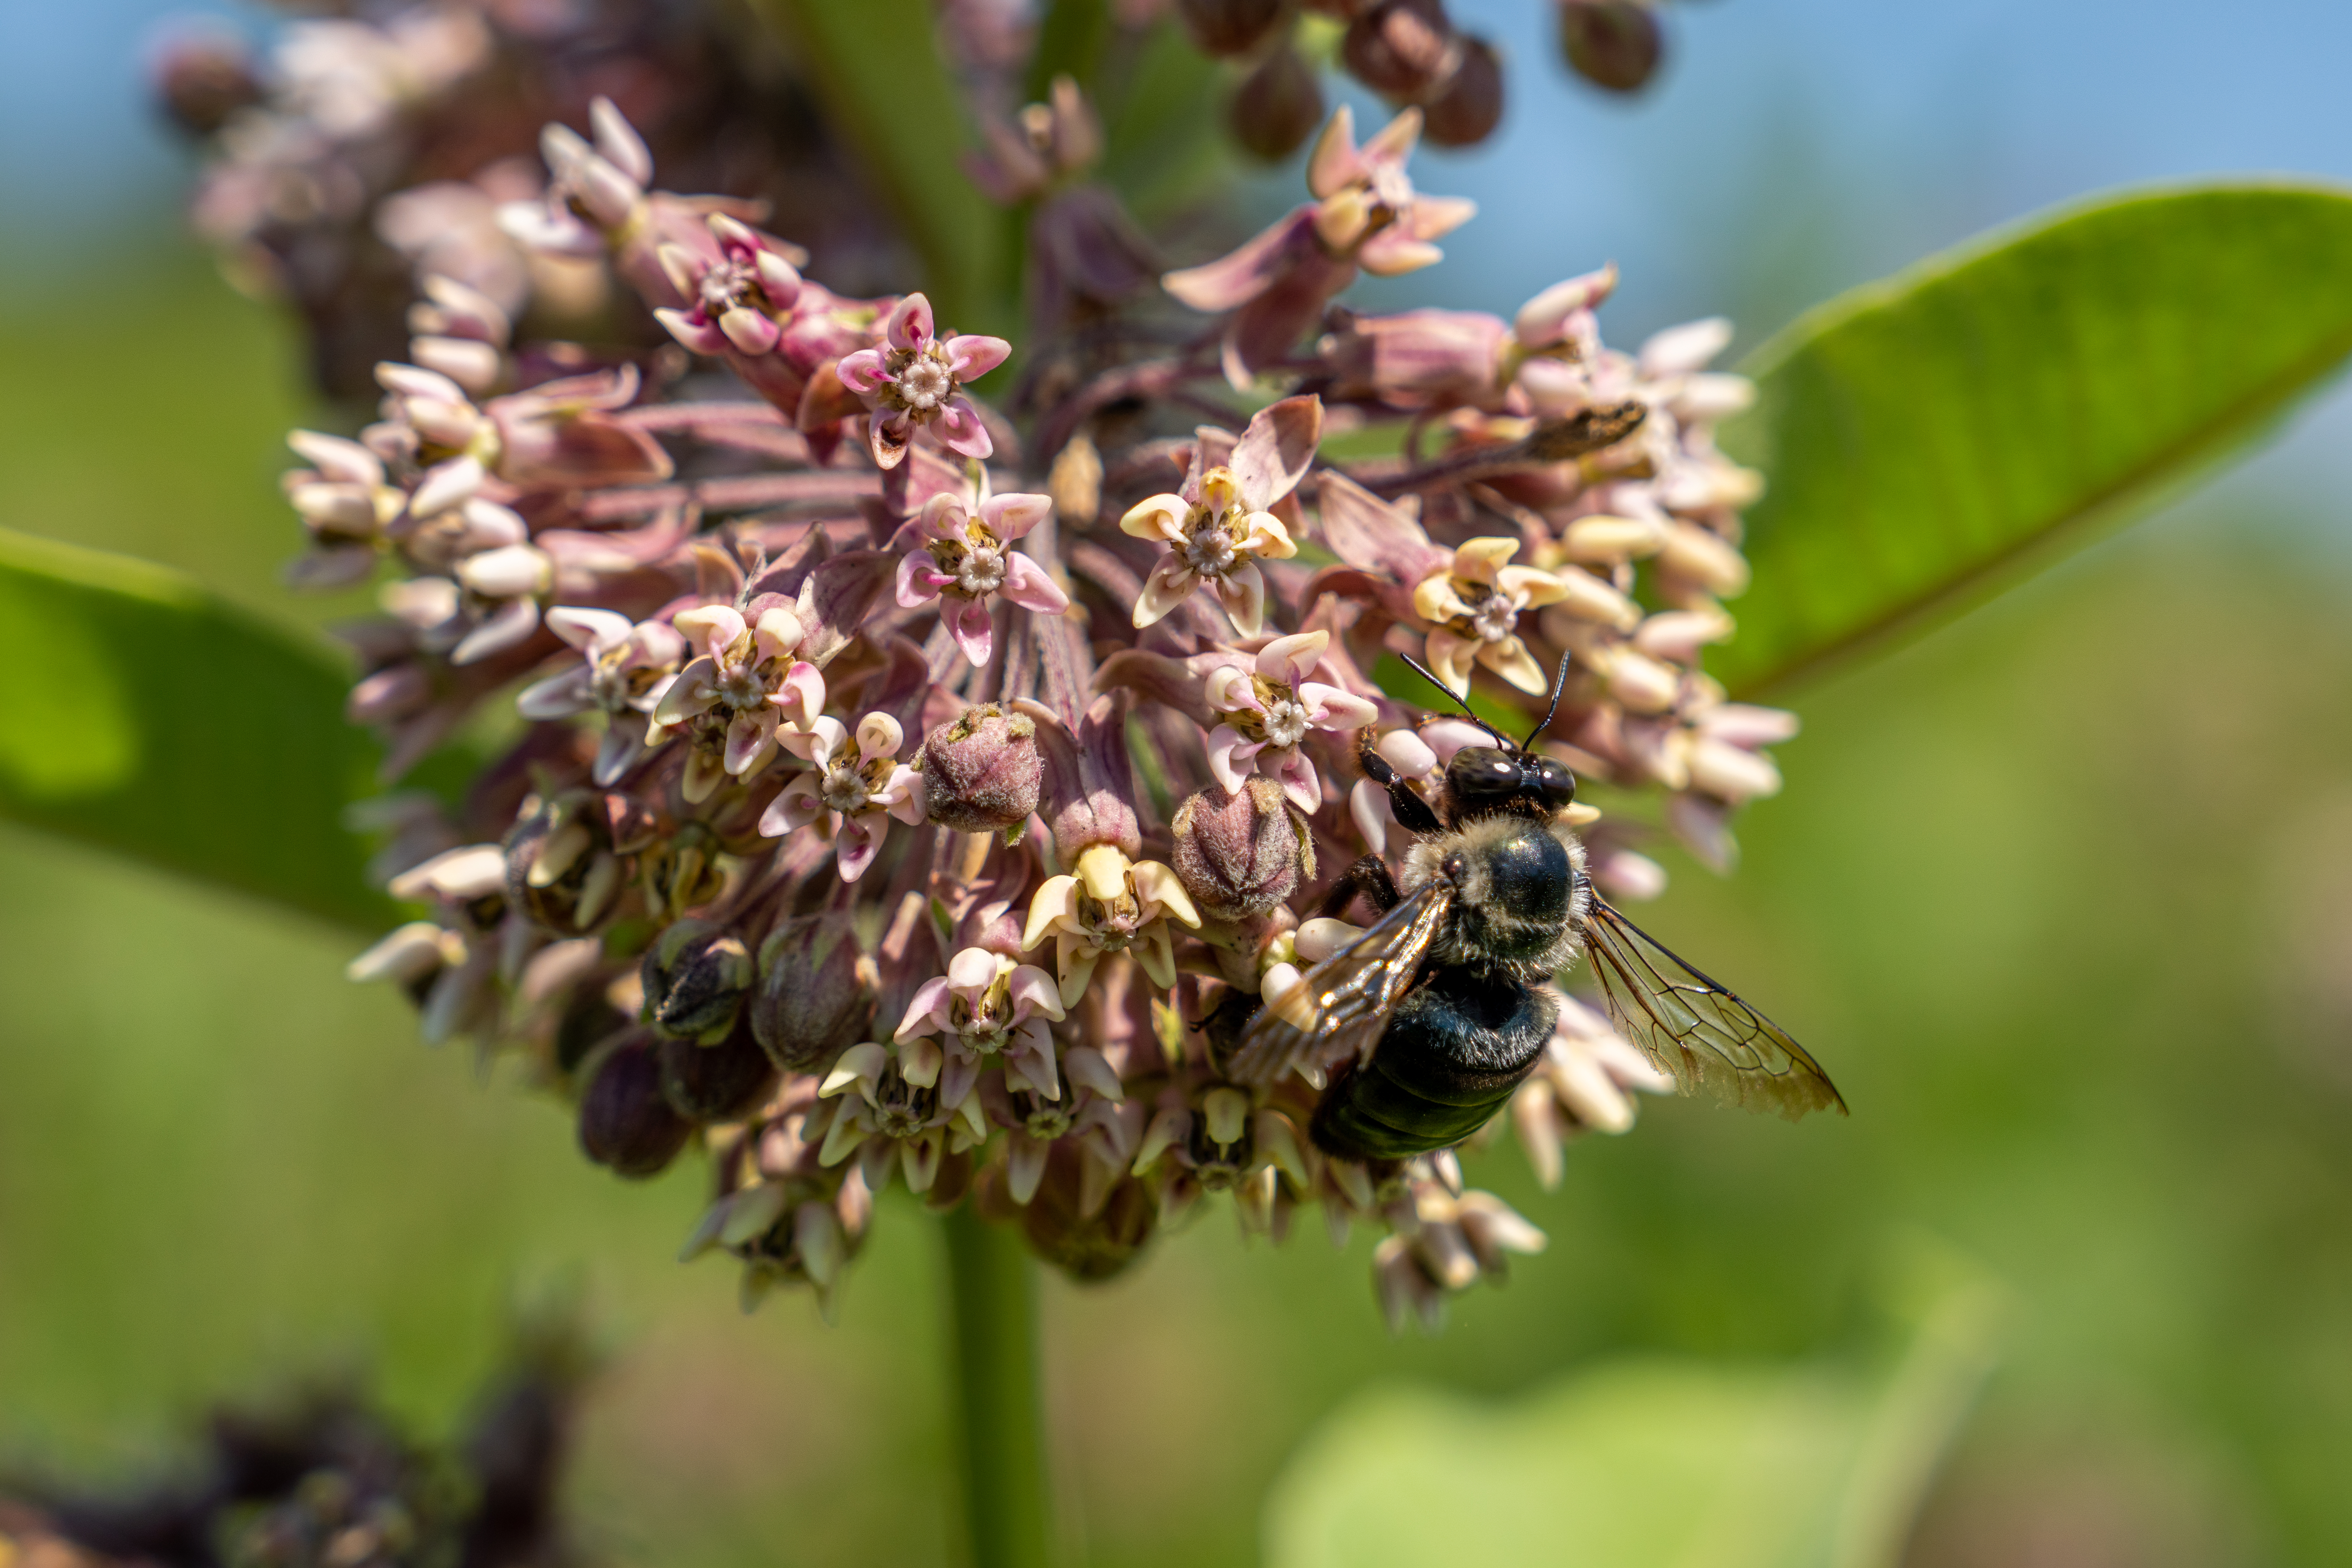 Carpenter bee on milkweed flower